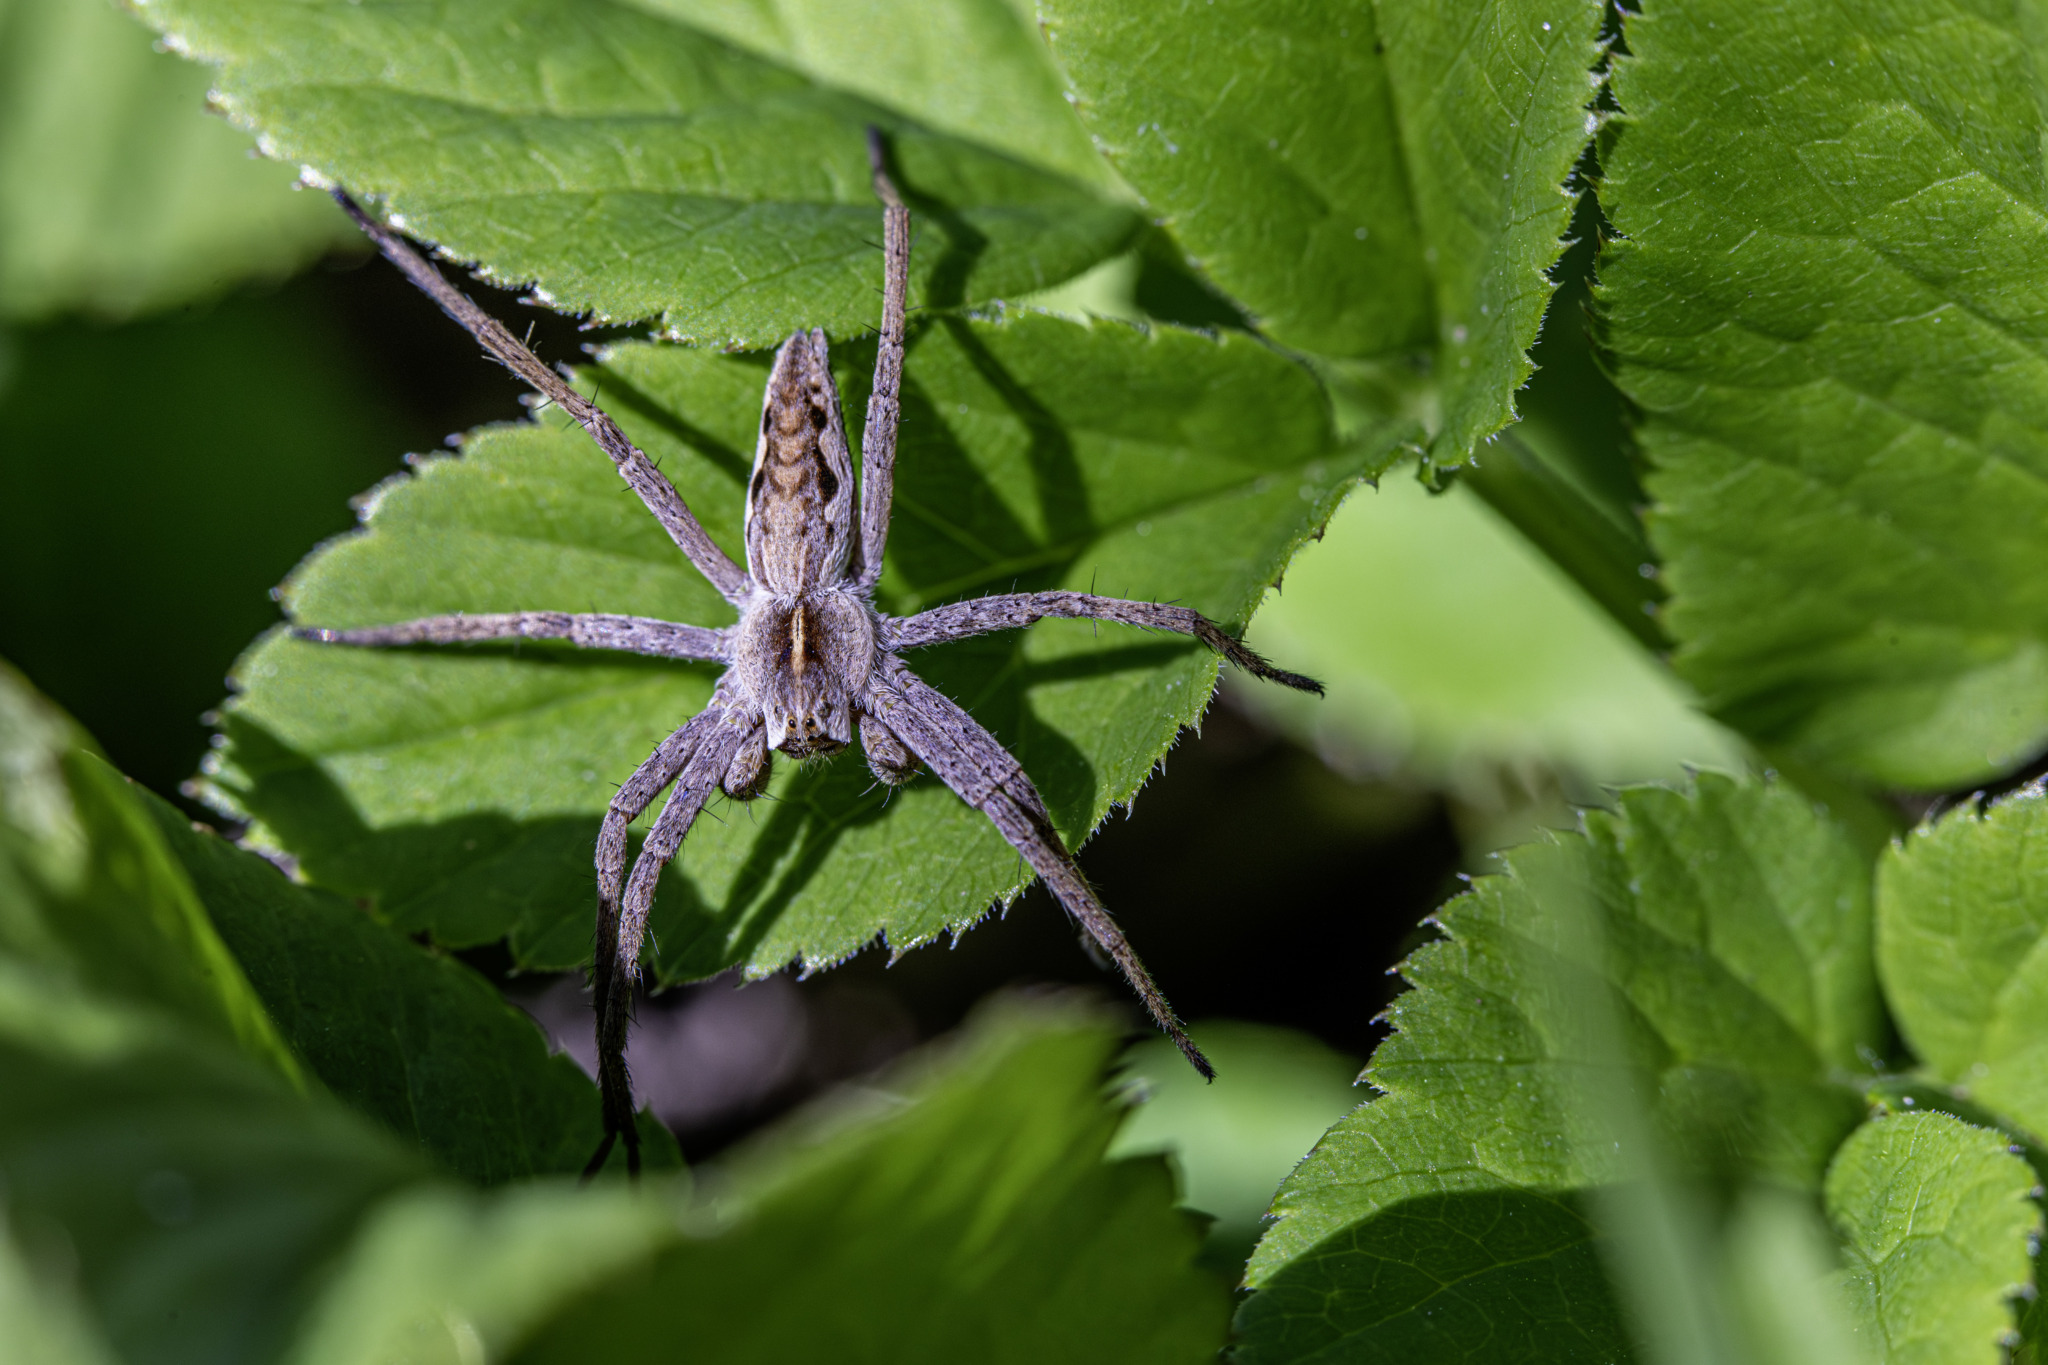 European nursery web spider (Pisaura mirabilis)